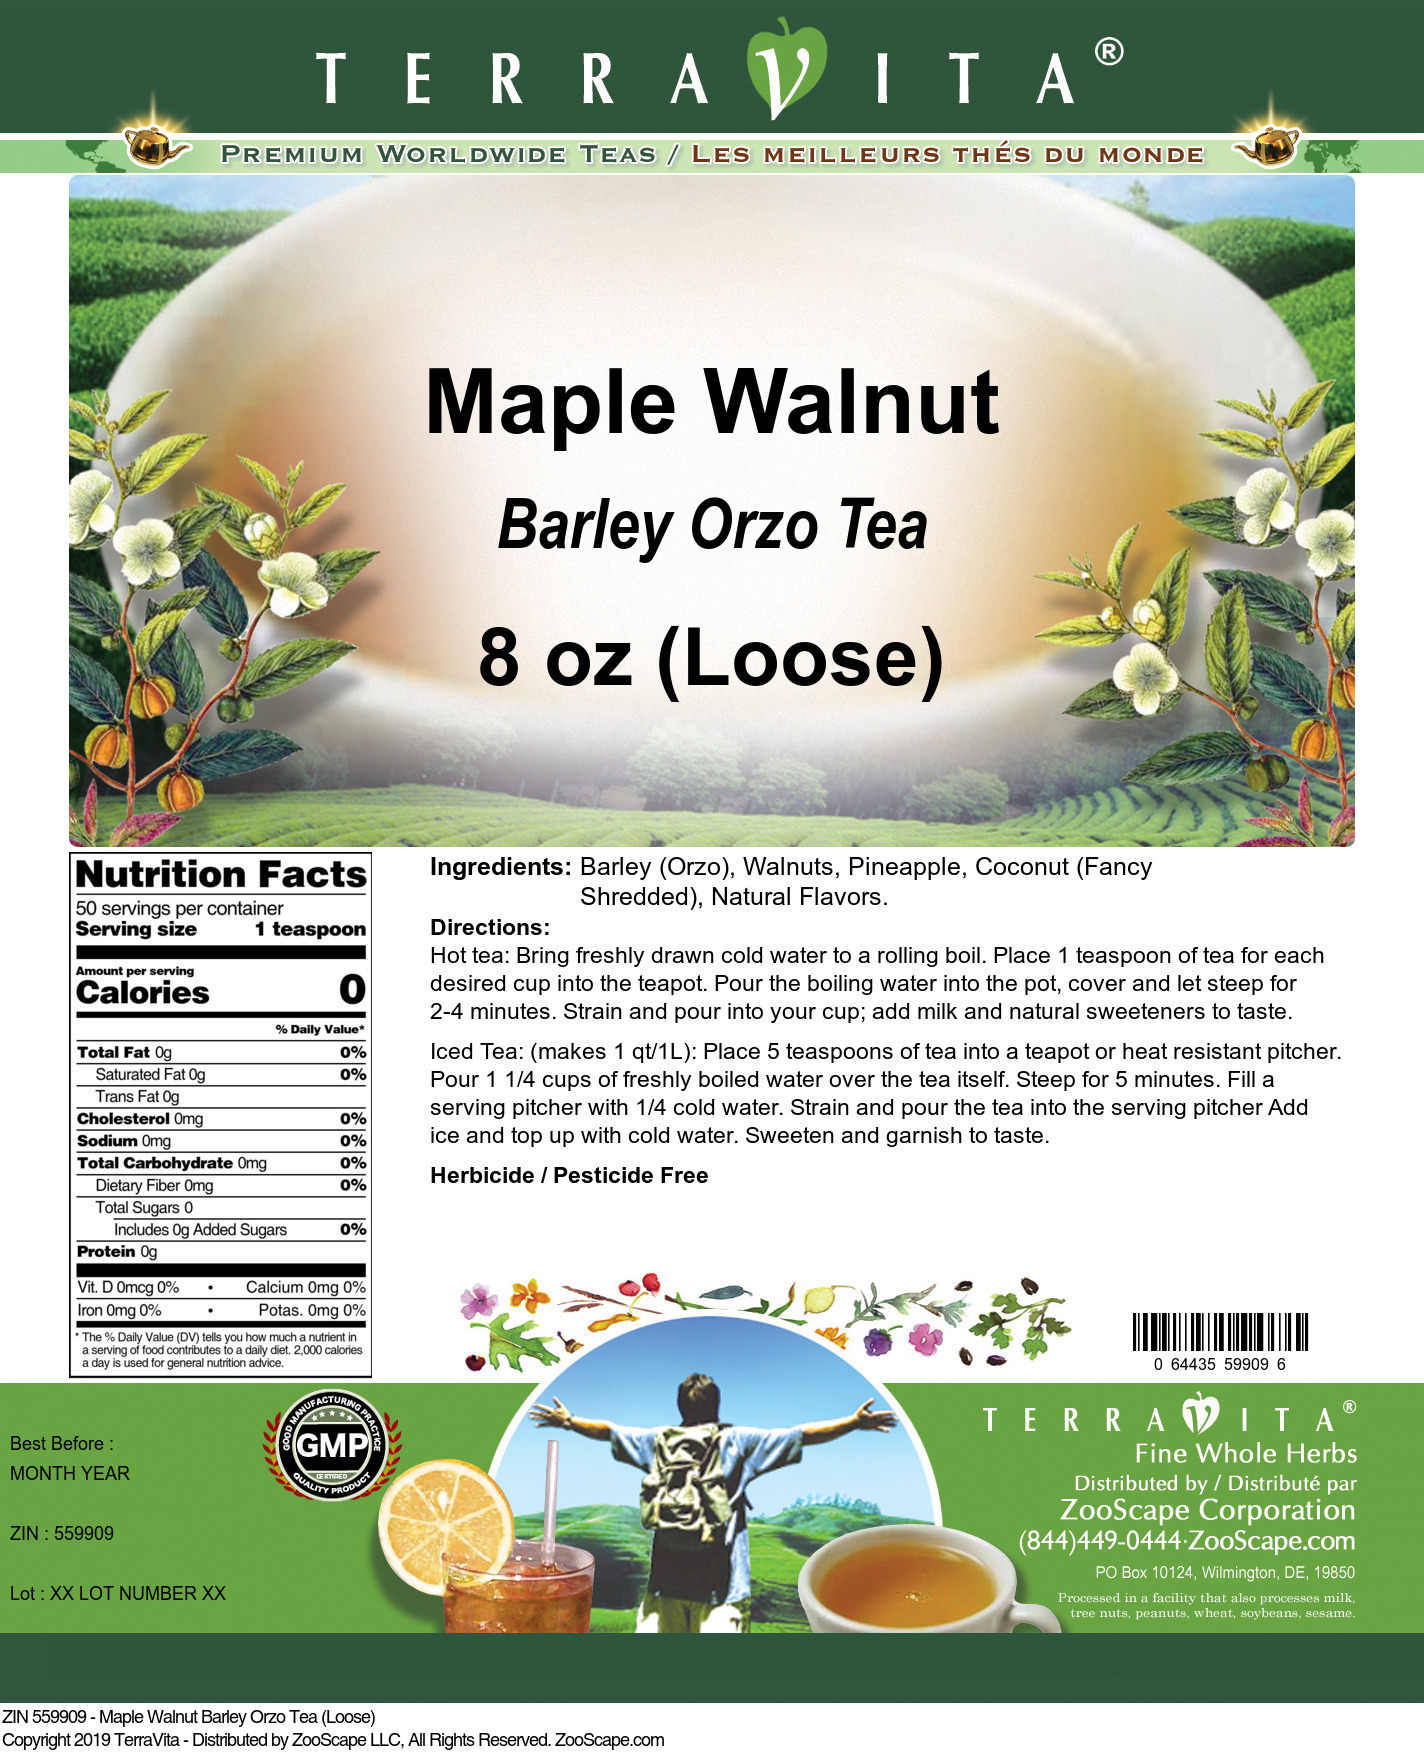 Maple Walnut Barley Orzo Tea (Loose) - Label